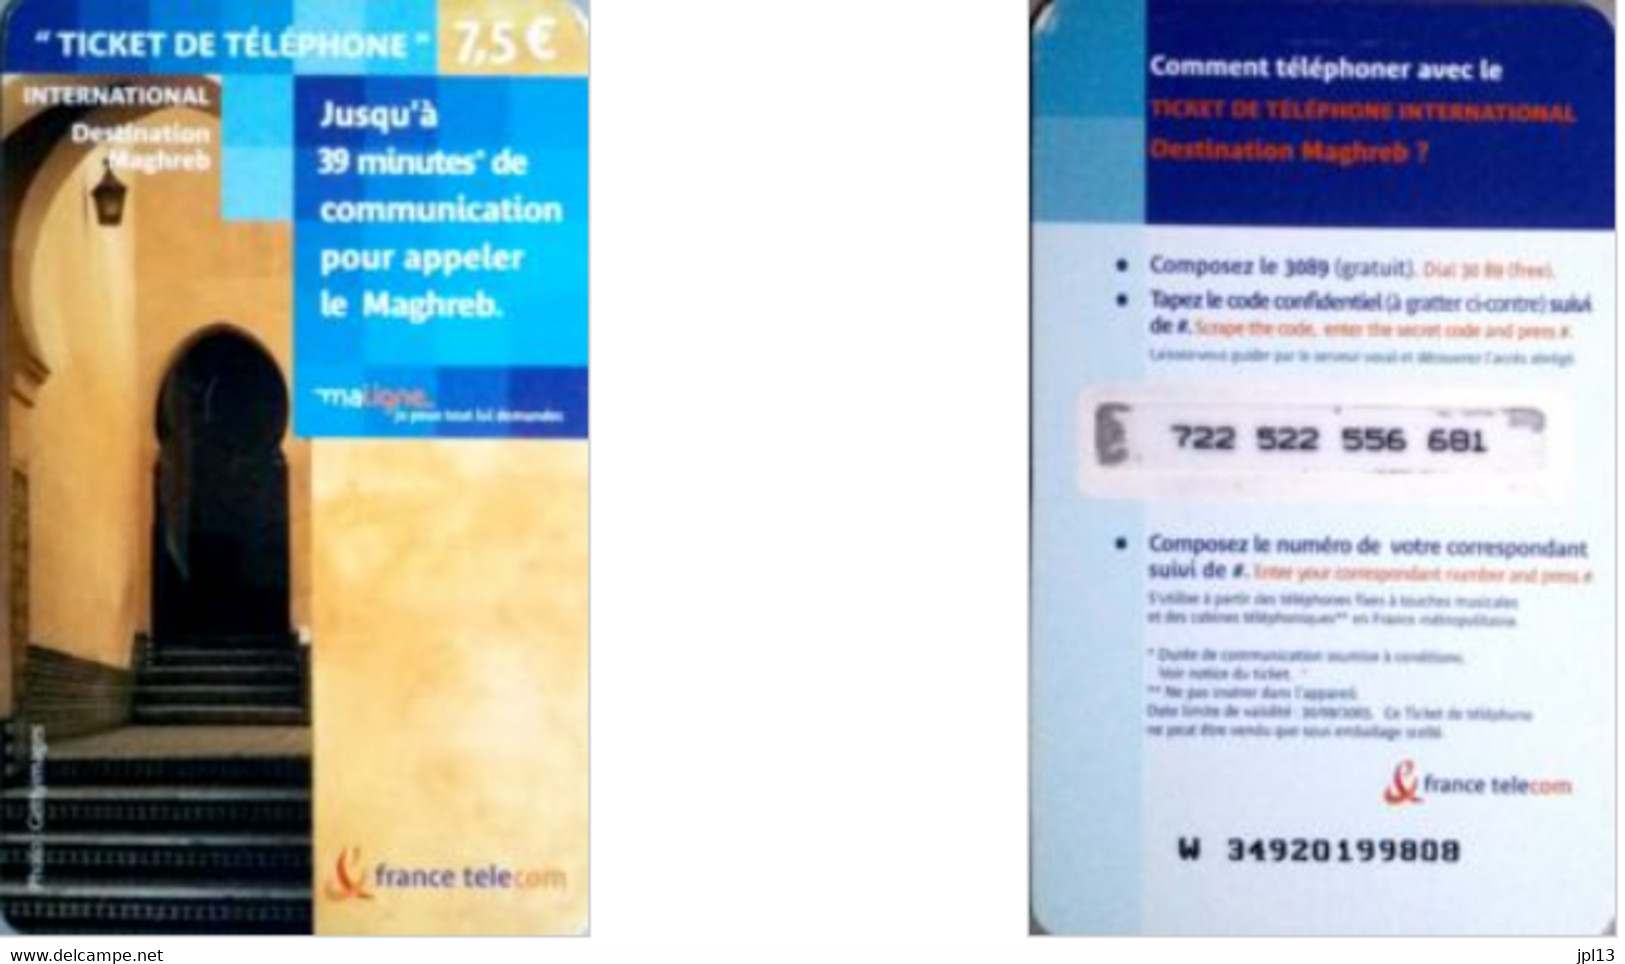 Ticket Téléphone - France - France Telecom - 7,5€ International Destination Maghreb, Série W 3492, Exp. 30/09/2005 - FT